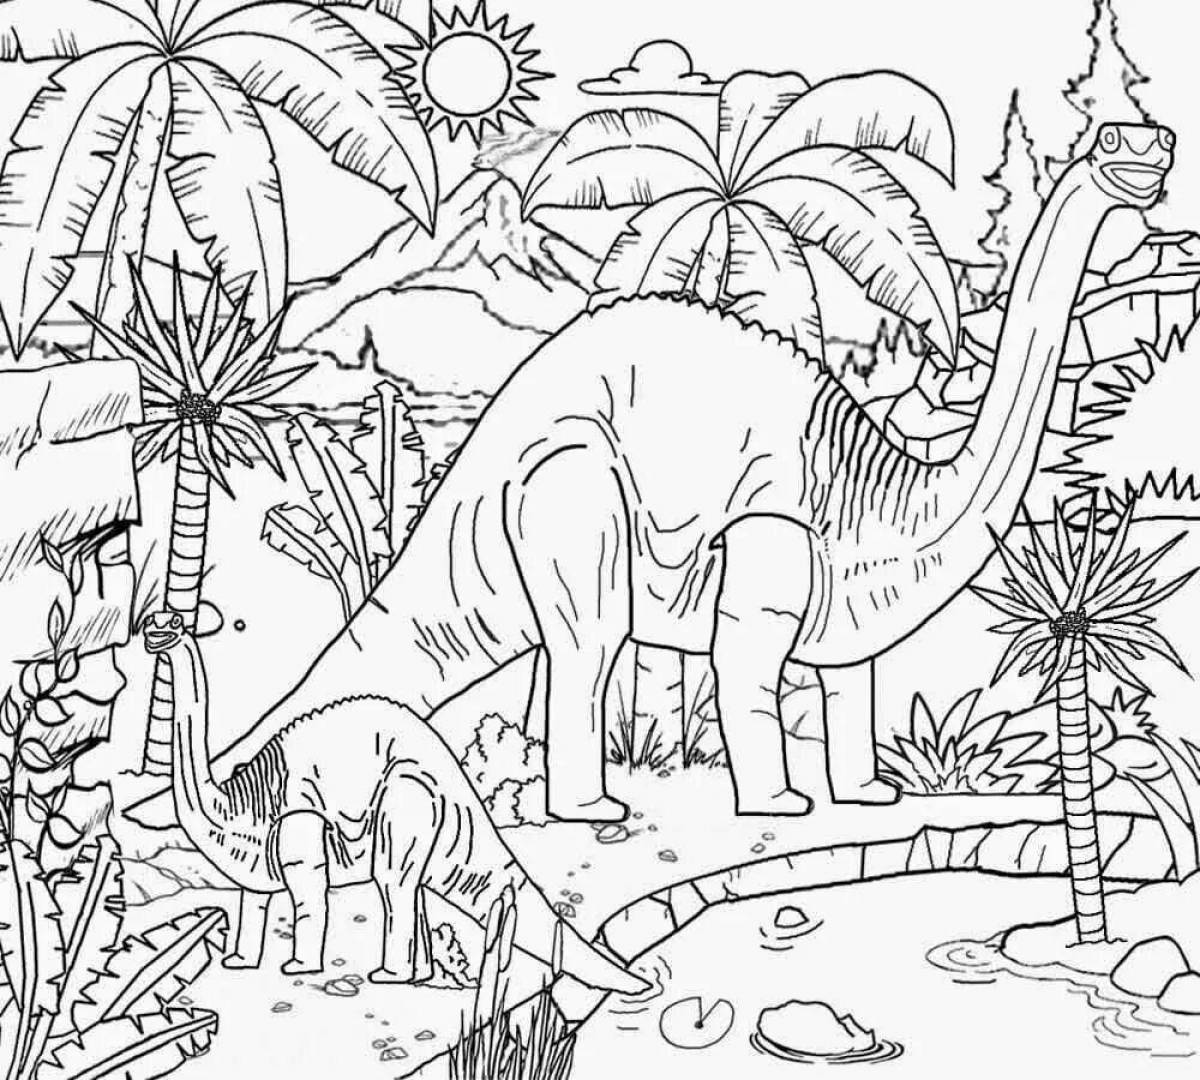 Adorable Jurassic coloring book